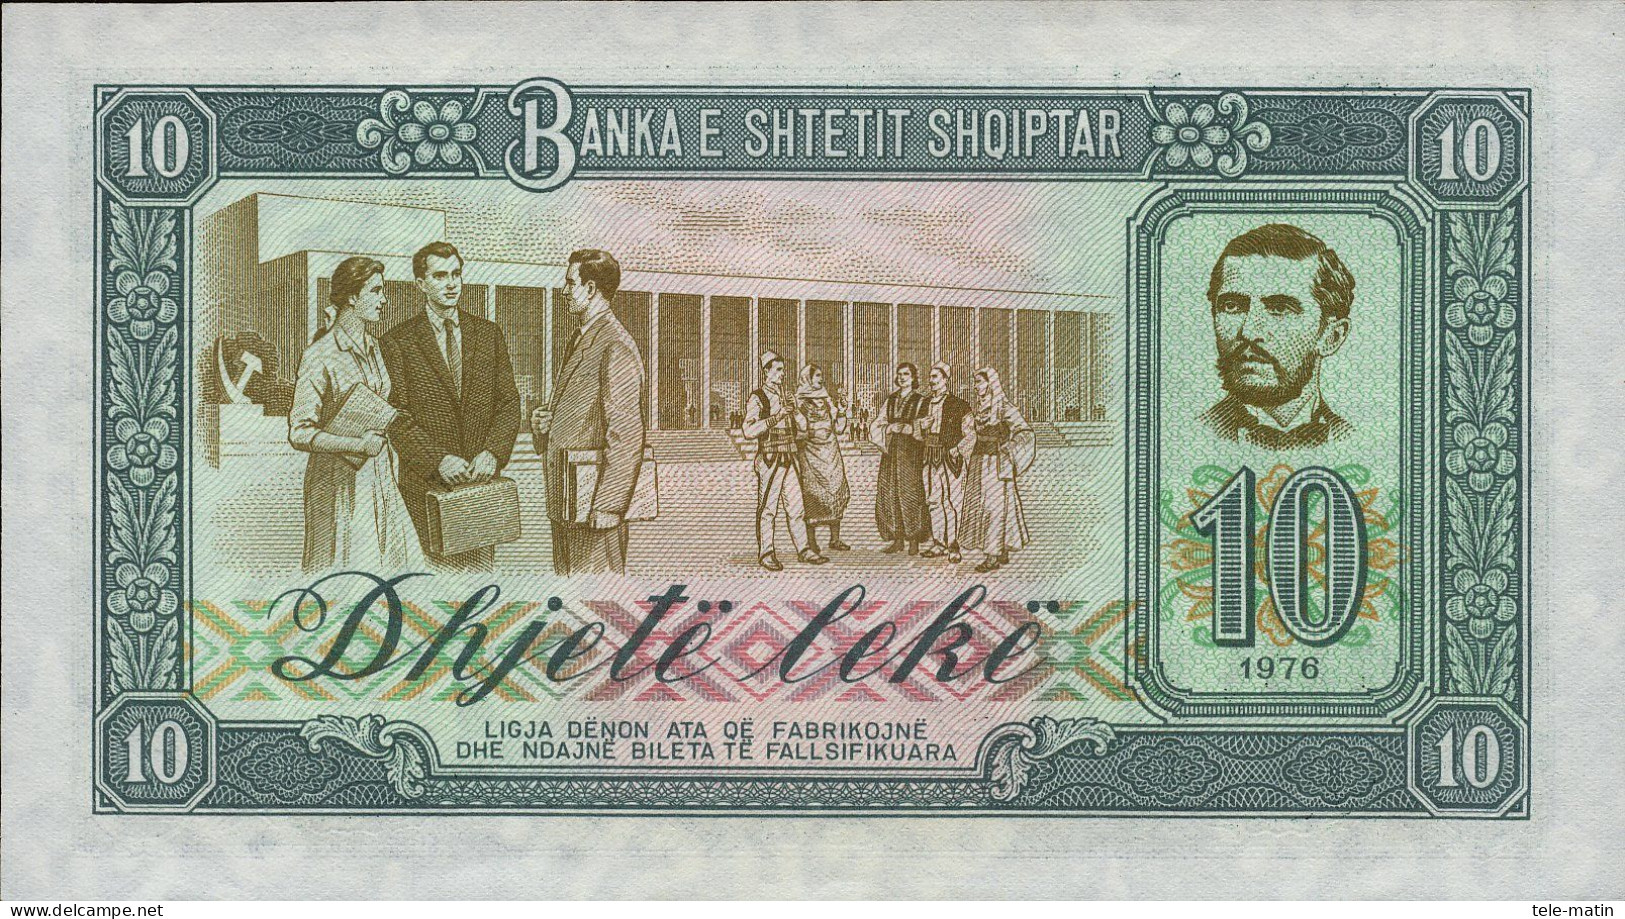 6 billets de l'Albanie de 1957 a 1976